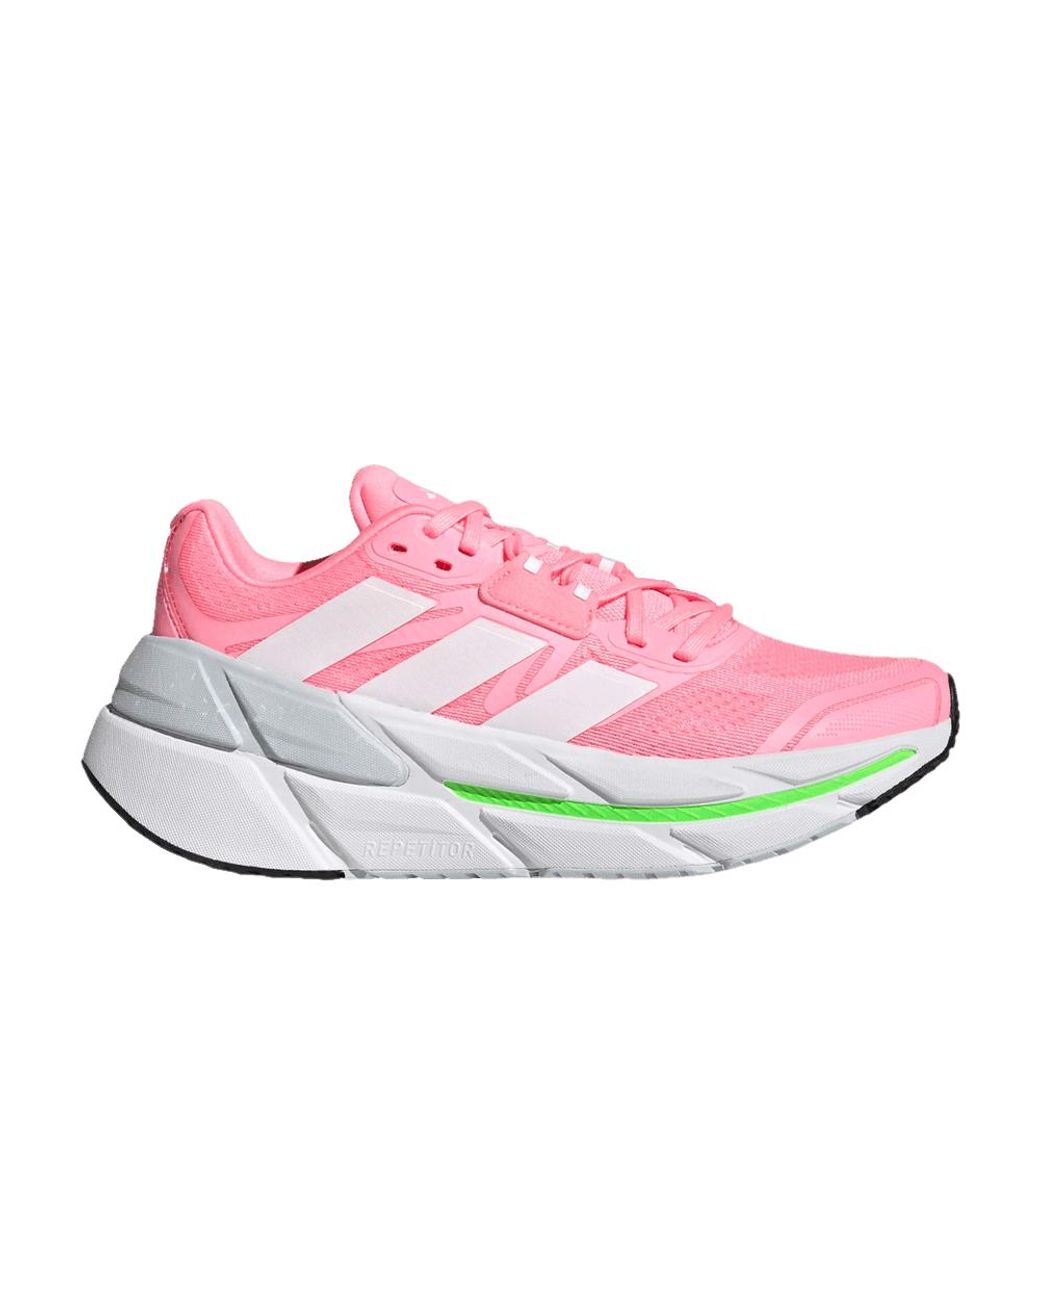 adidas Adistar Cs Shoes in Pink | Lyst